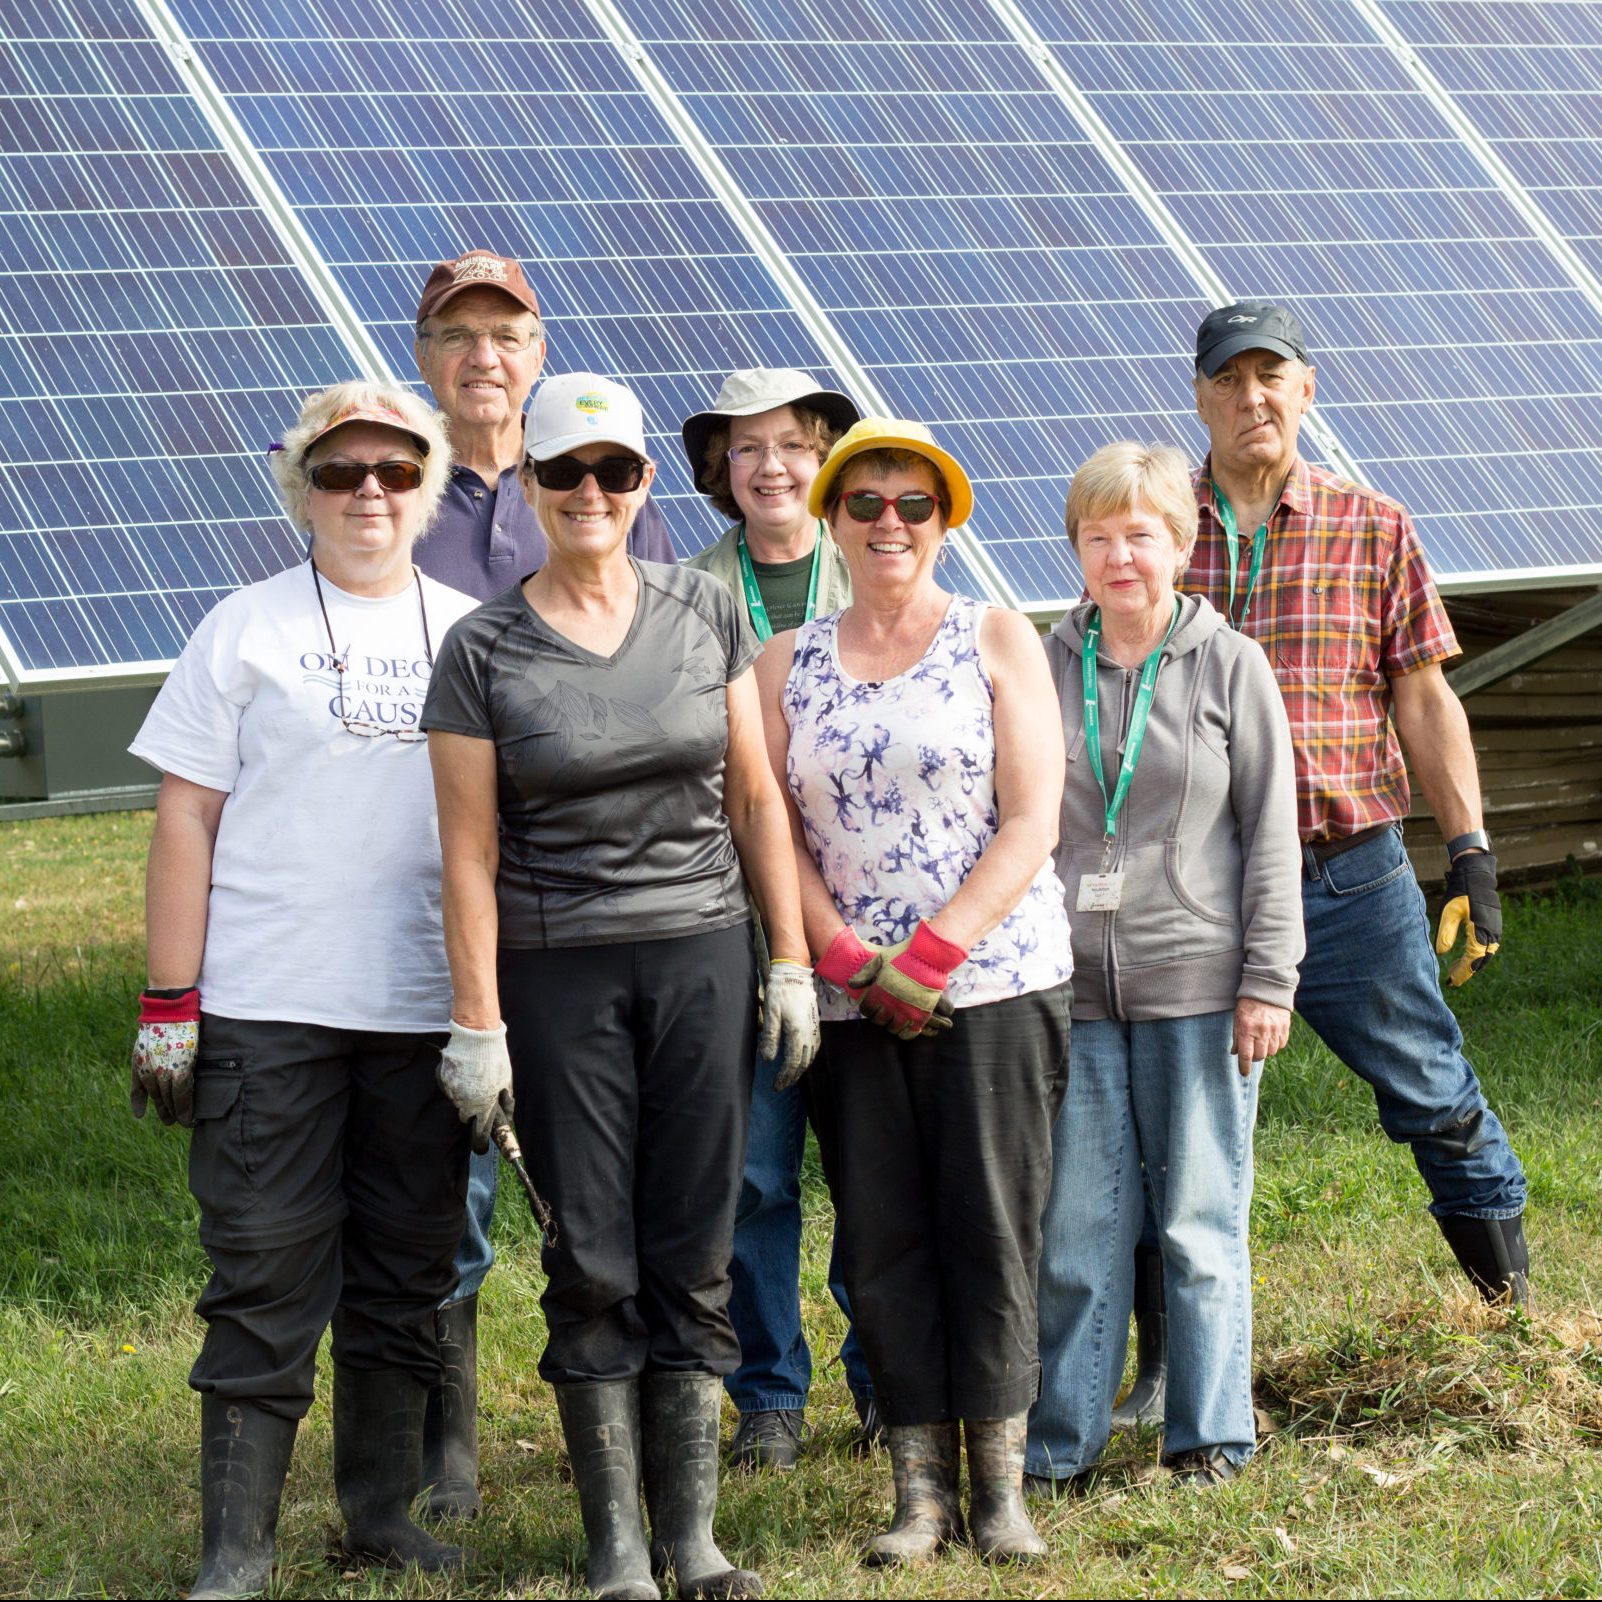 Group of volunteers standing in front of solar panels.